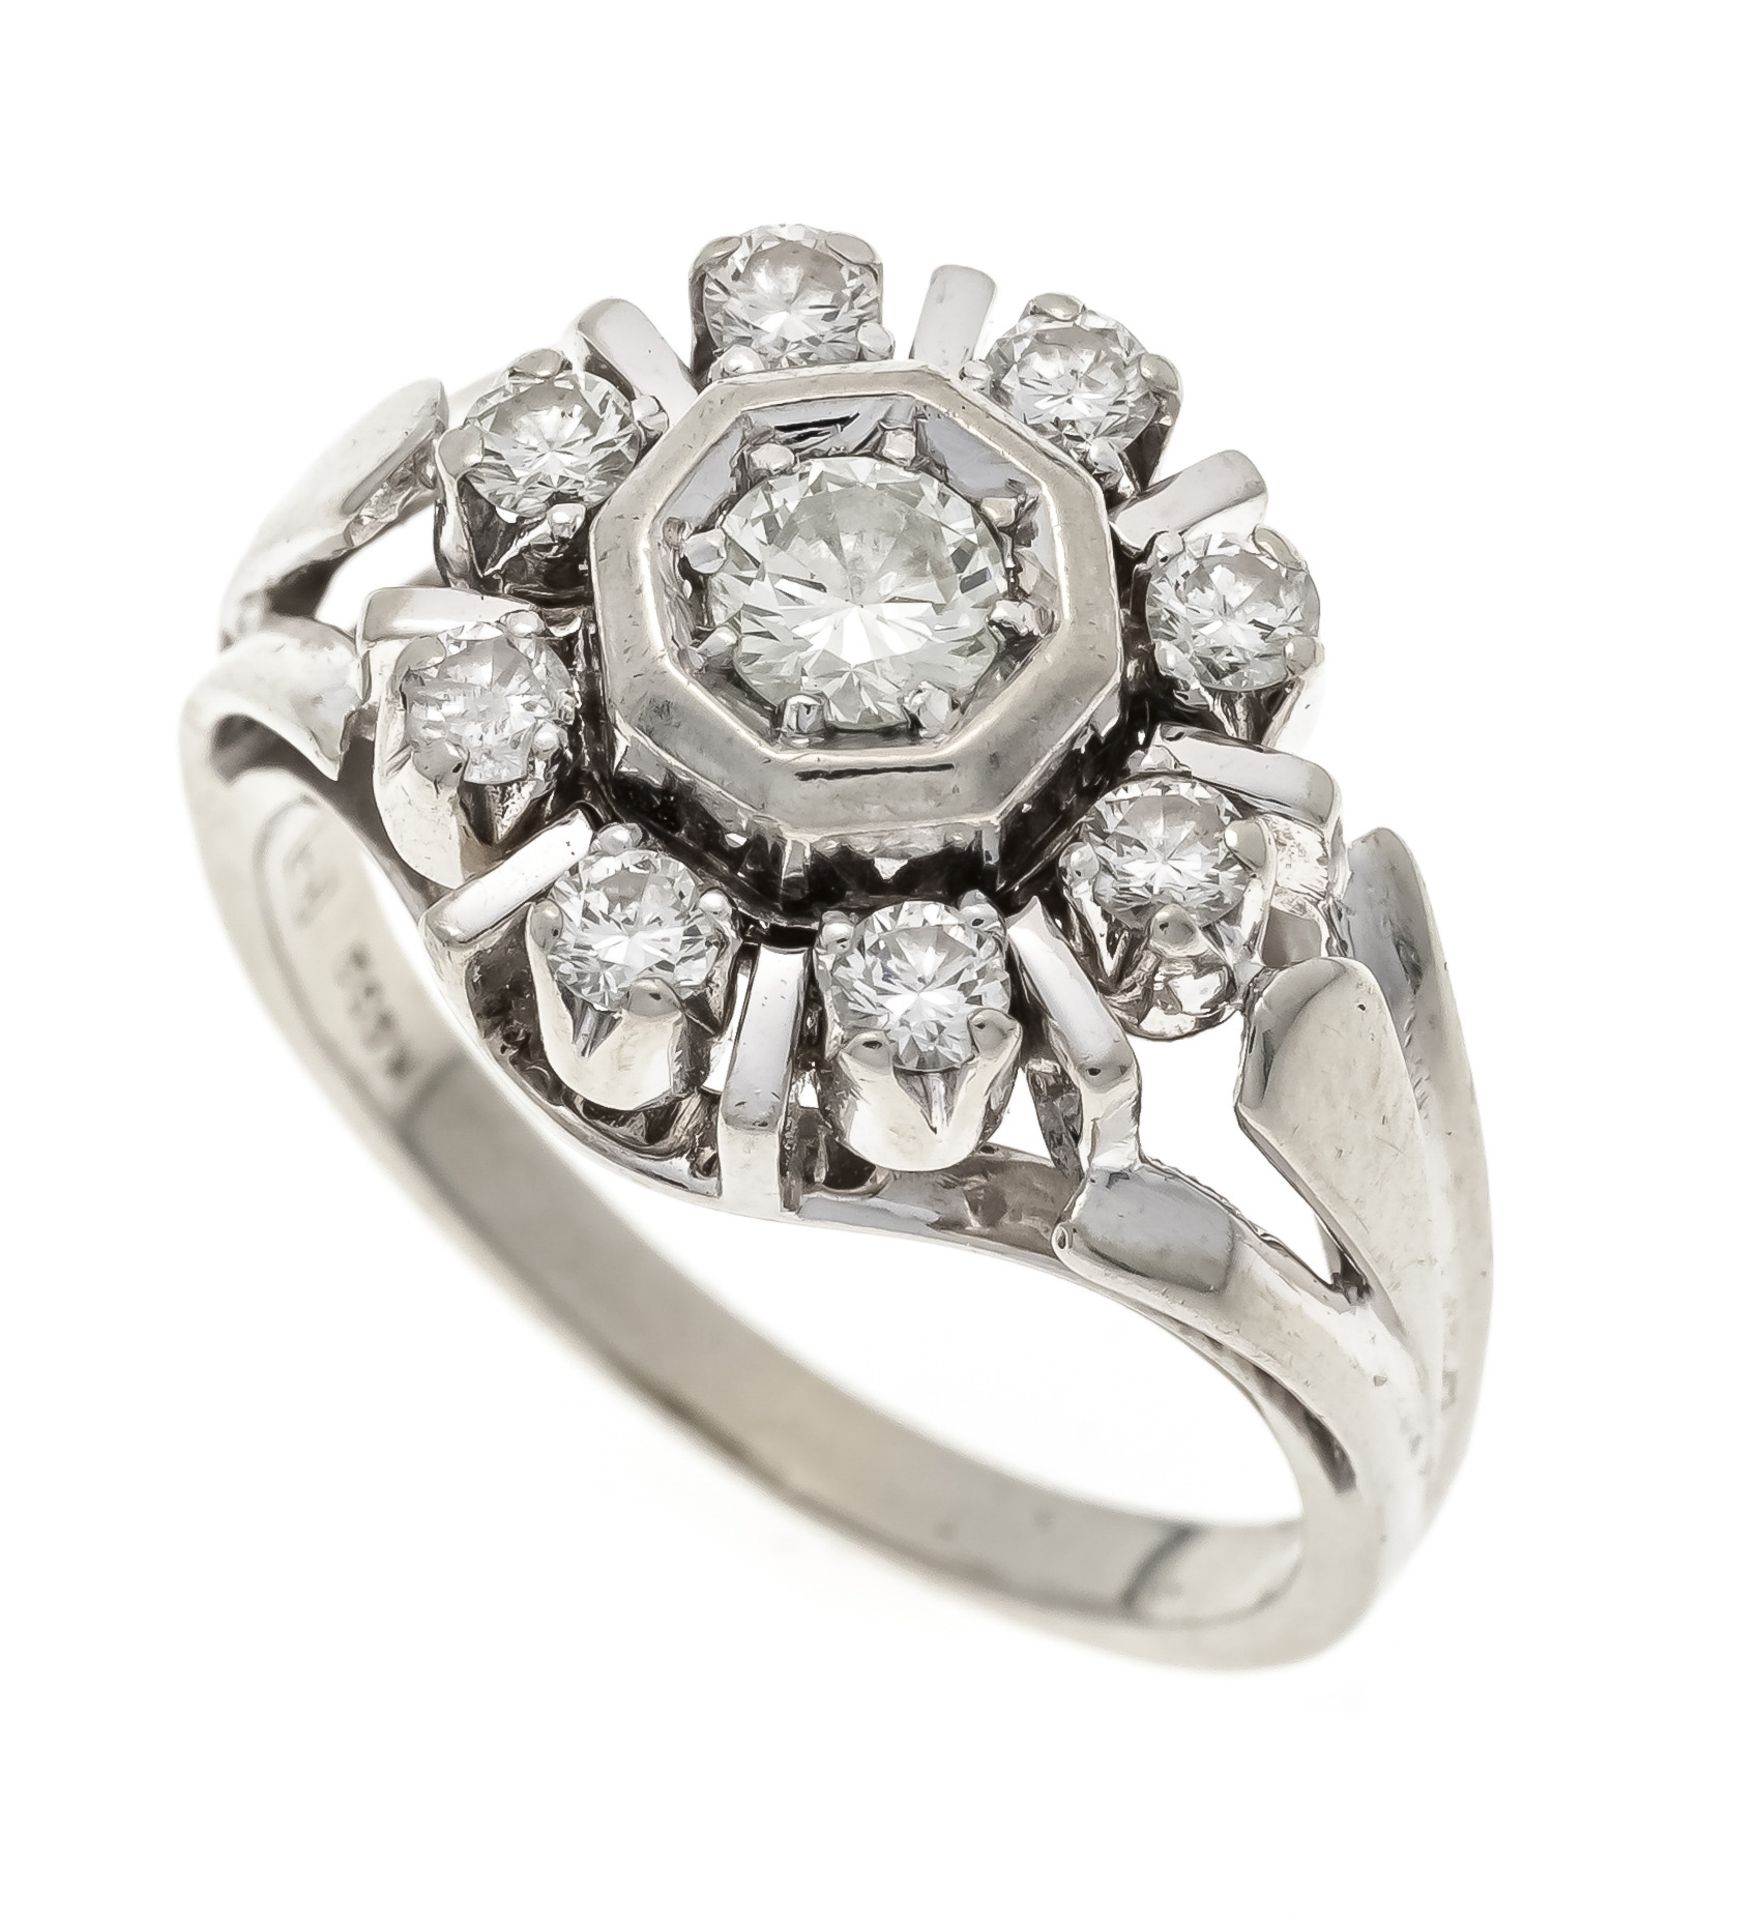 Diamond ring WG 750/000 with one brilliant-cut diamond 0.40 ct l.tintedW/VS and 8 brilliant-cut